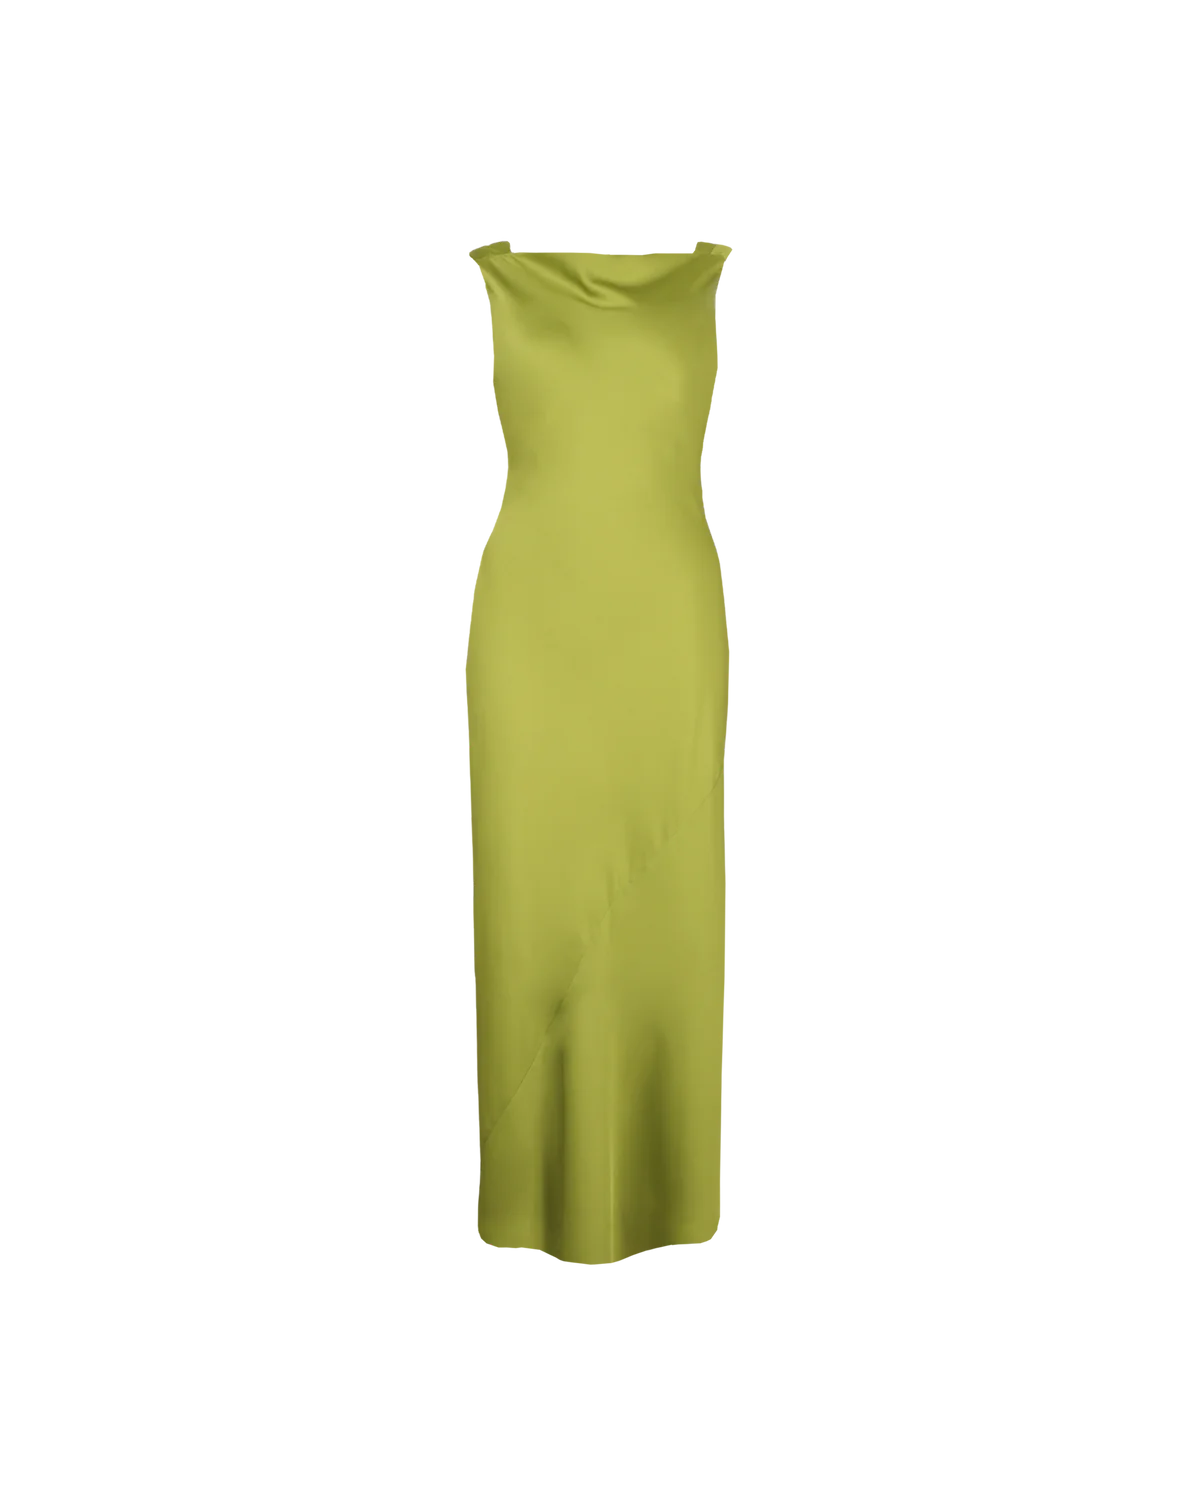 Firebird Cowl Gown Pea Green